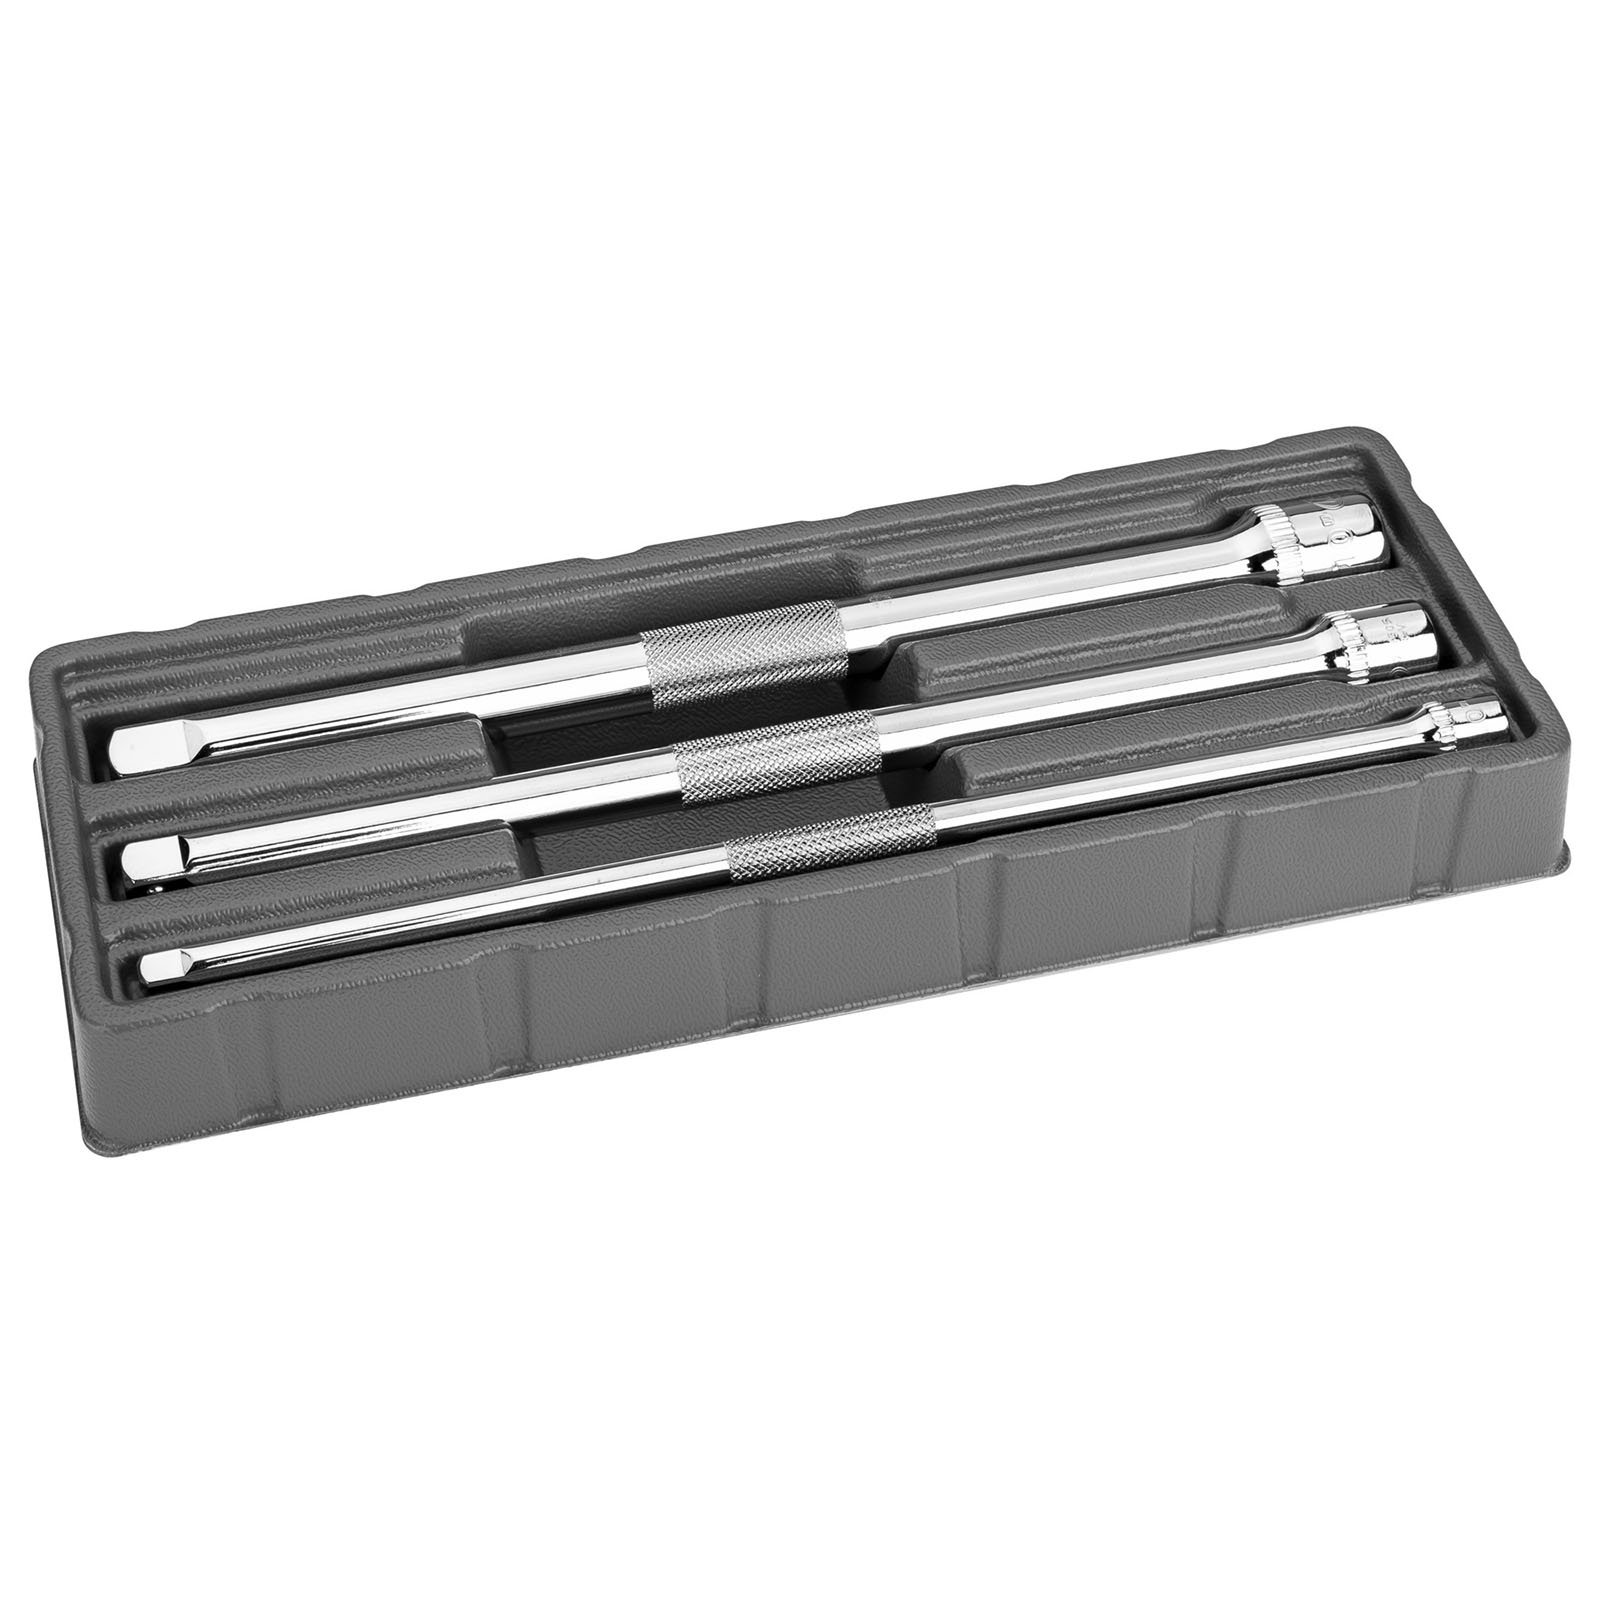 Ingersoll Rand 3 Piece 10 Inch Extension Bar Set - 752056X